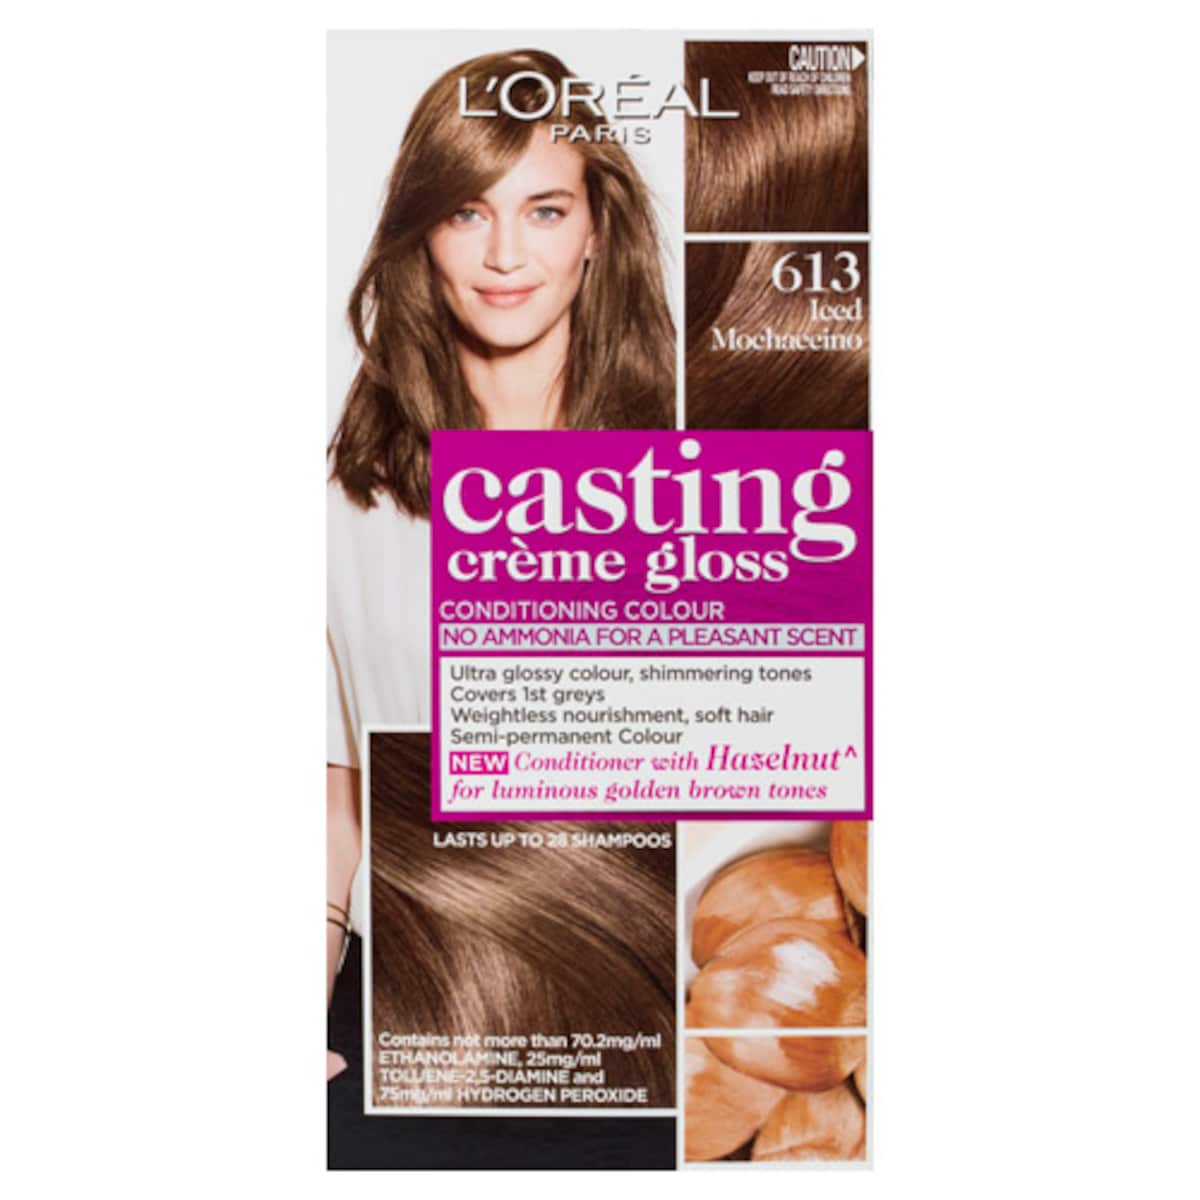 L'Oreal Casting Creme Gloss 613 Iced Mochaccino Hair Colour